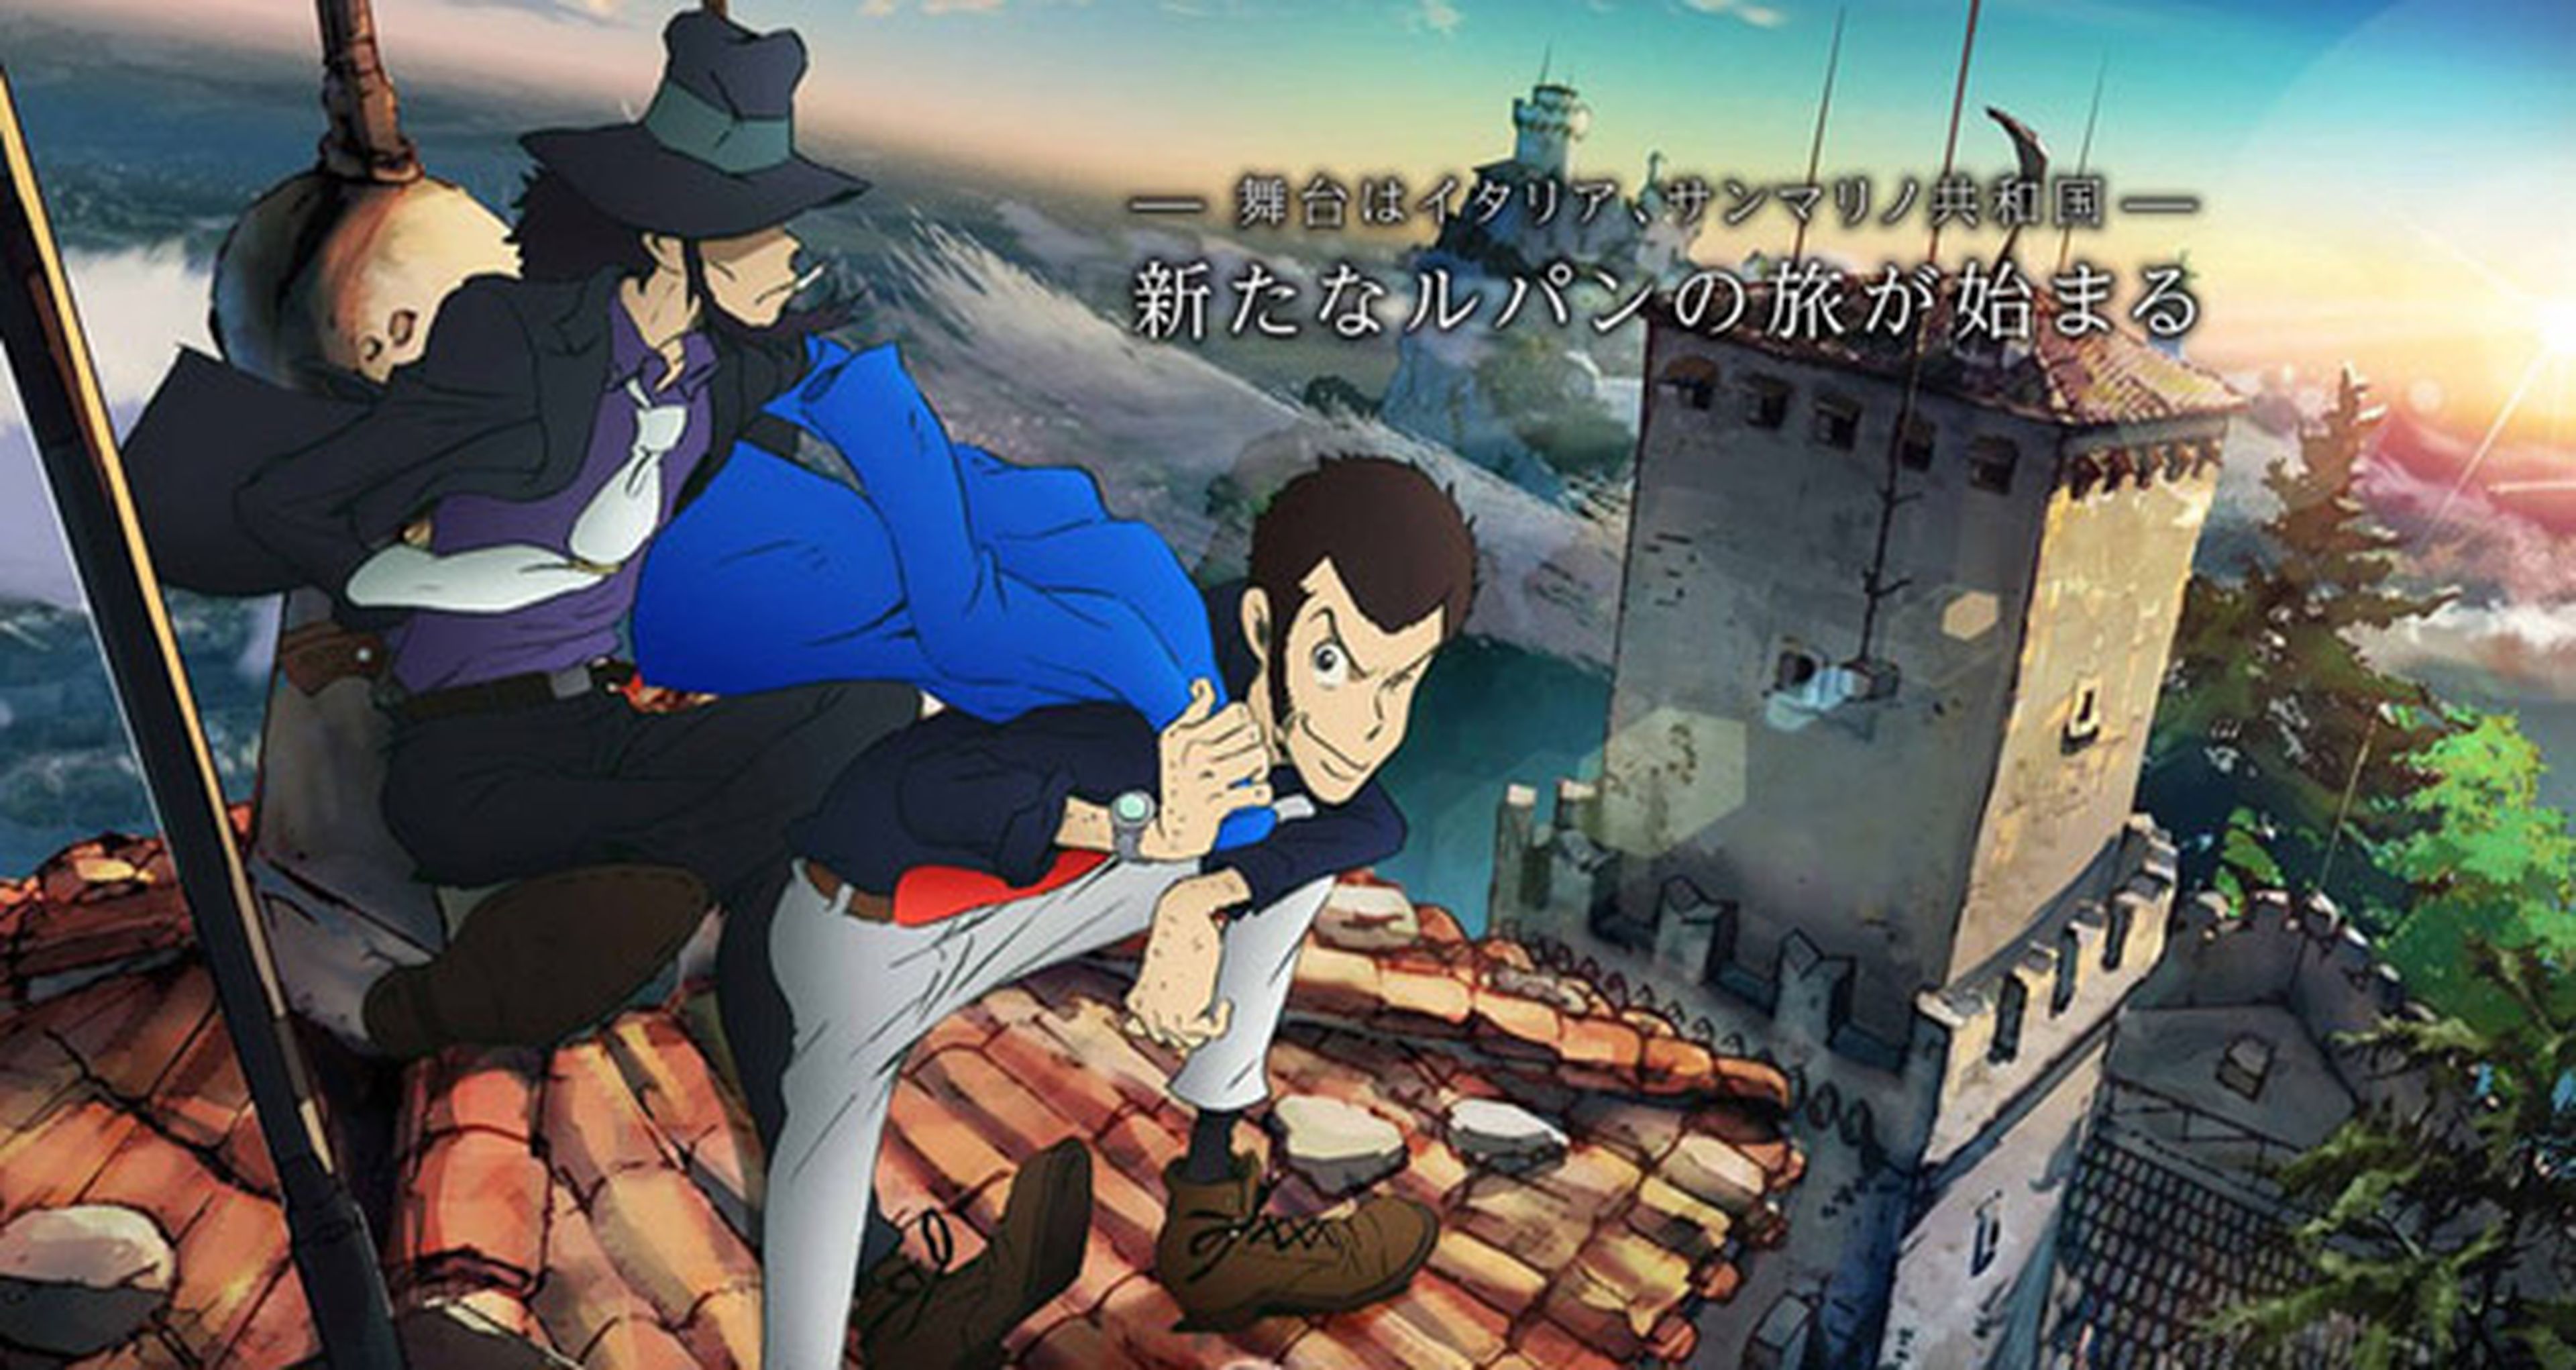 Lupin III estrena nuevo anime en otoño